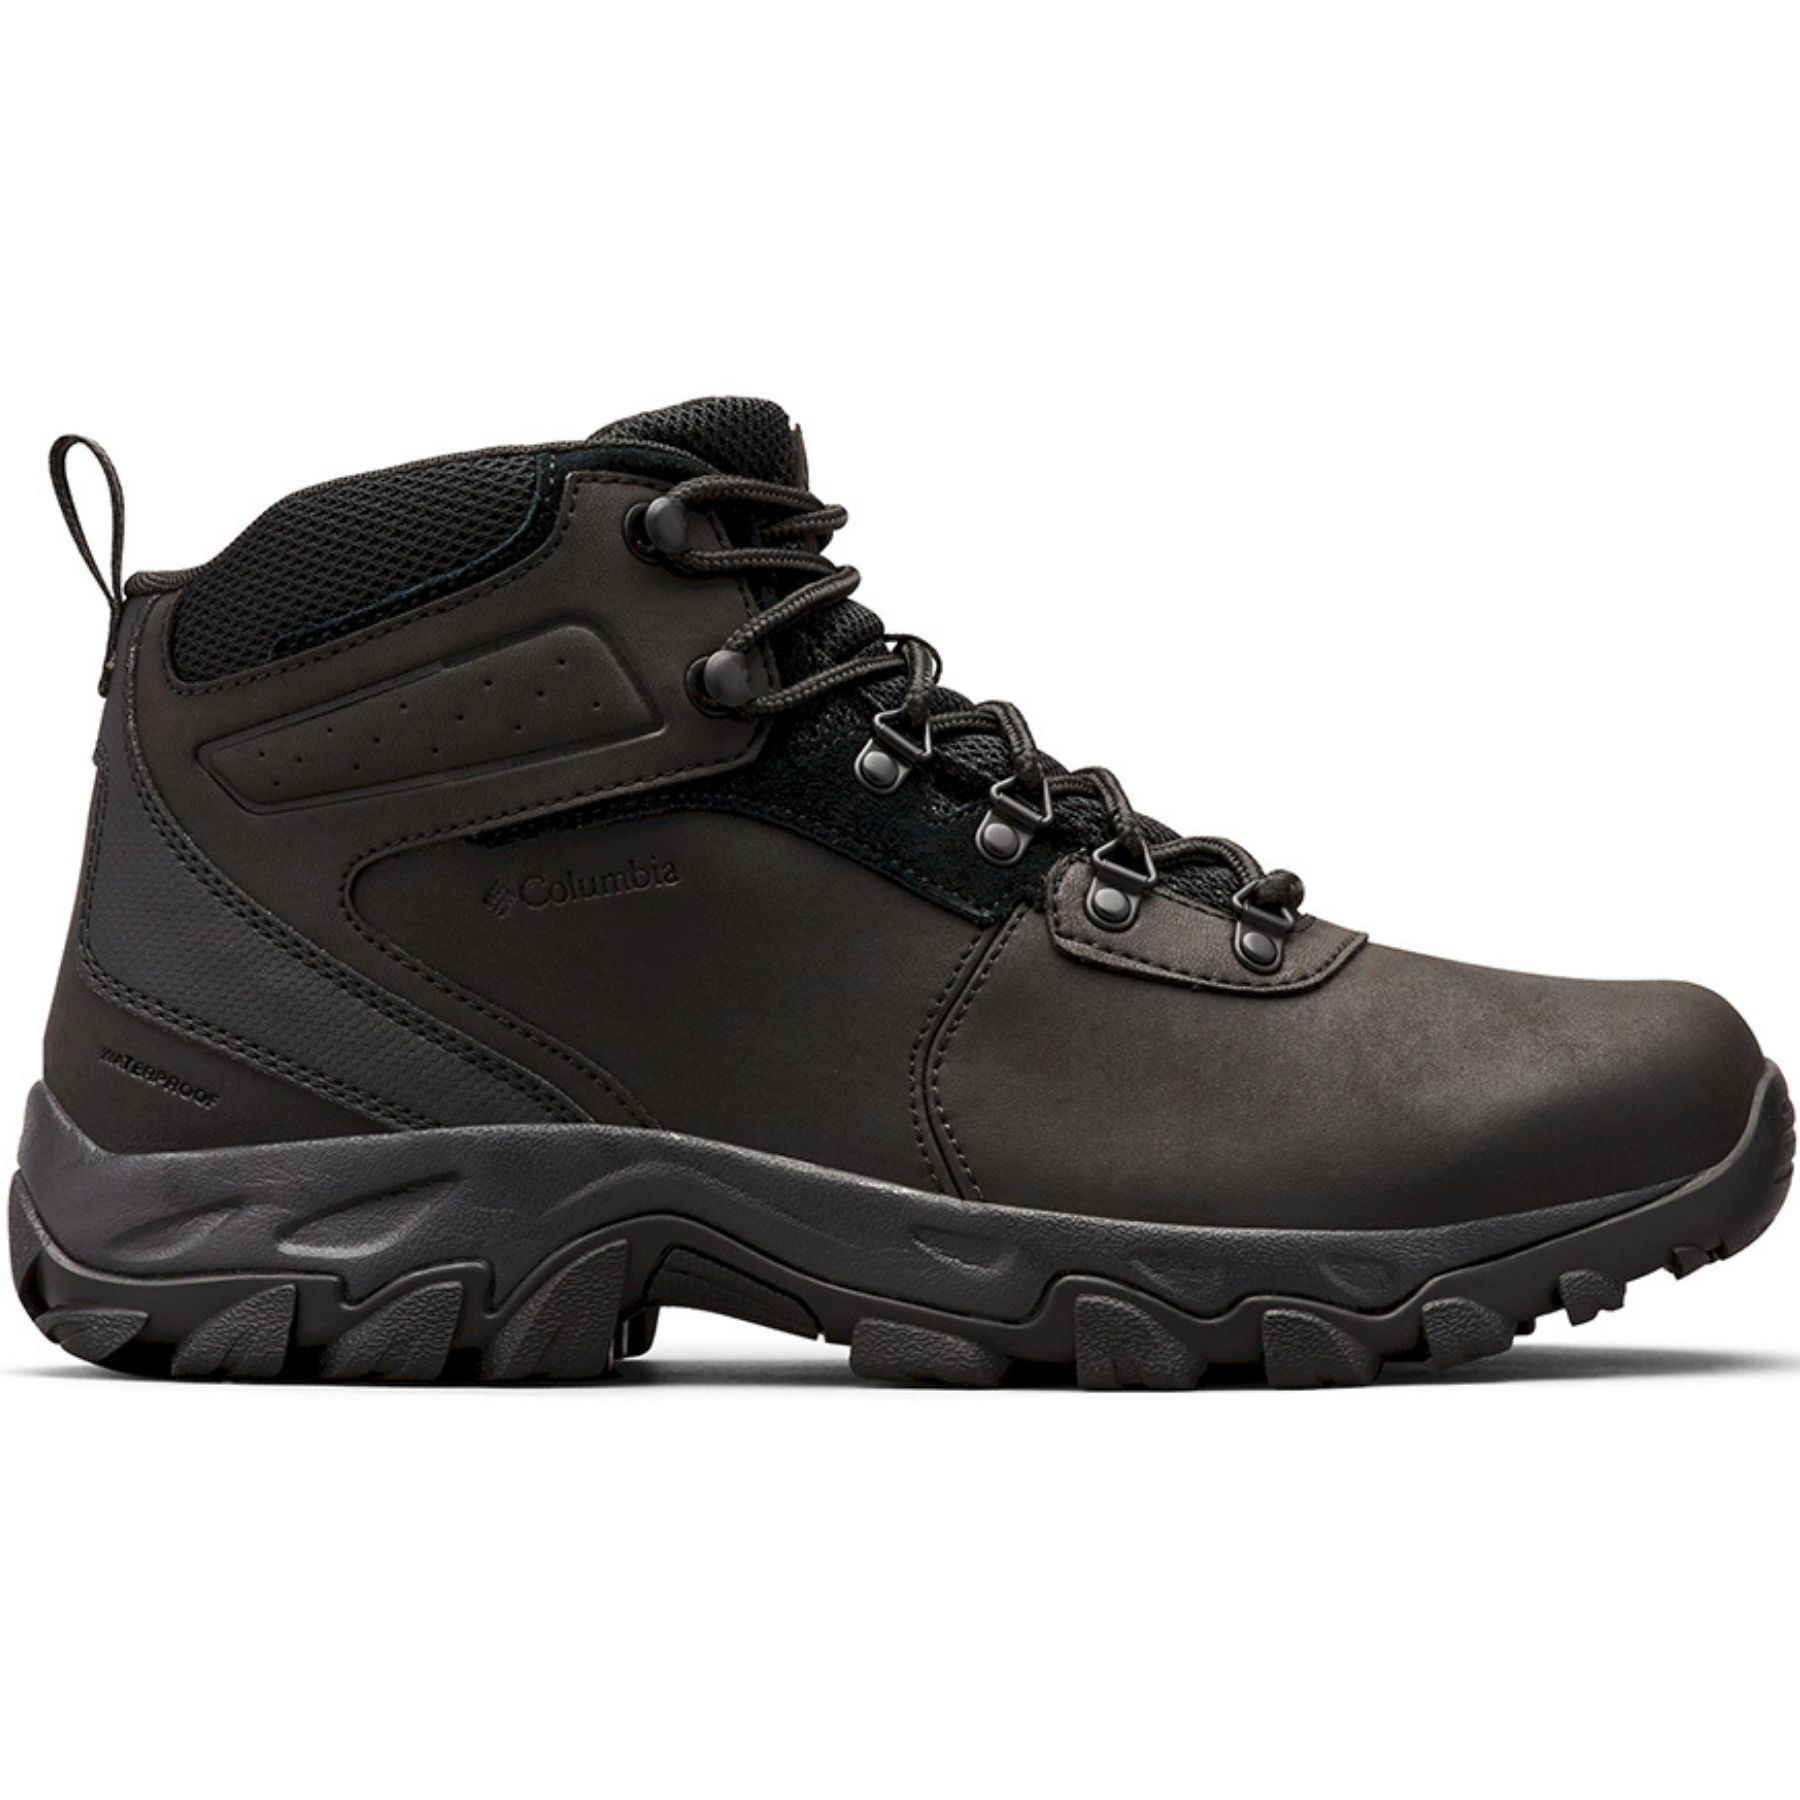 Columbia Newton Ridge Plus II Waterproof - Walking Boots - Men's